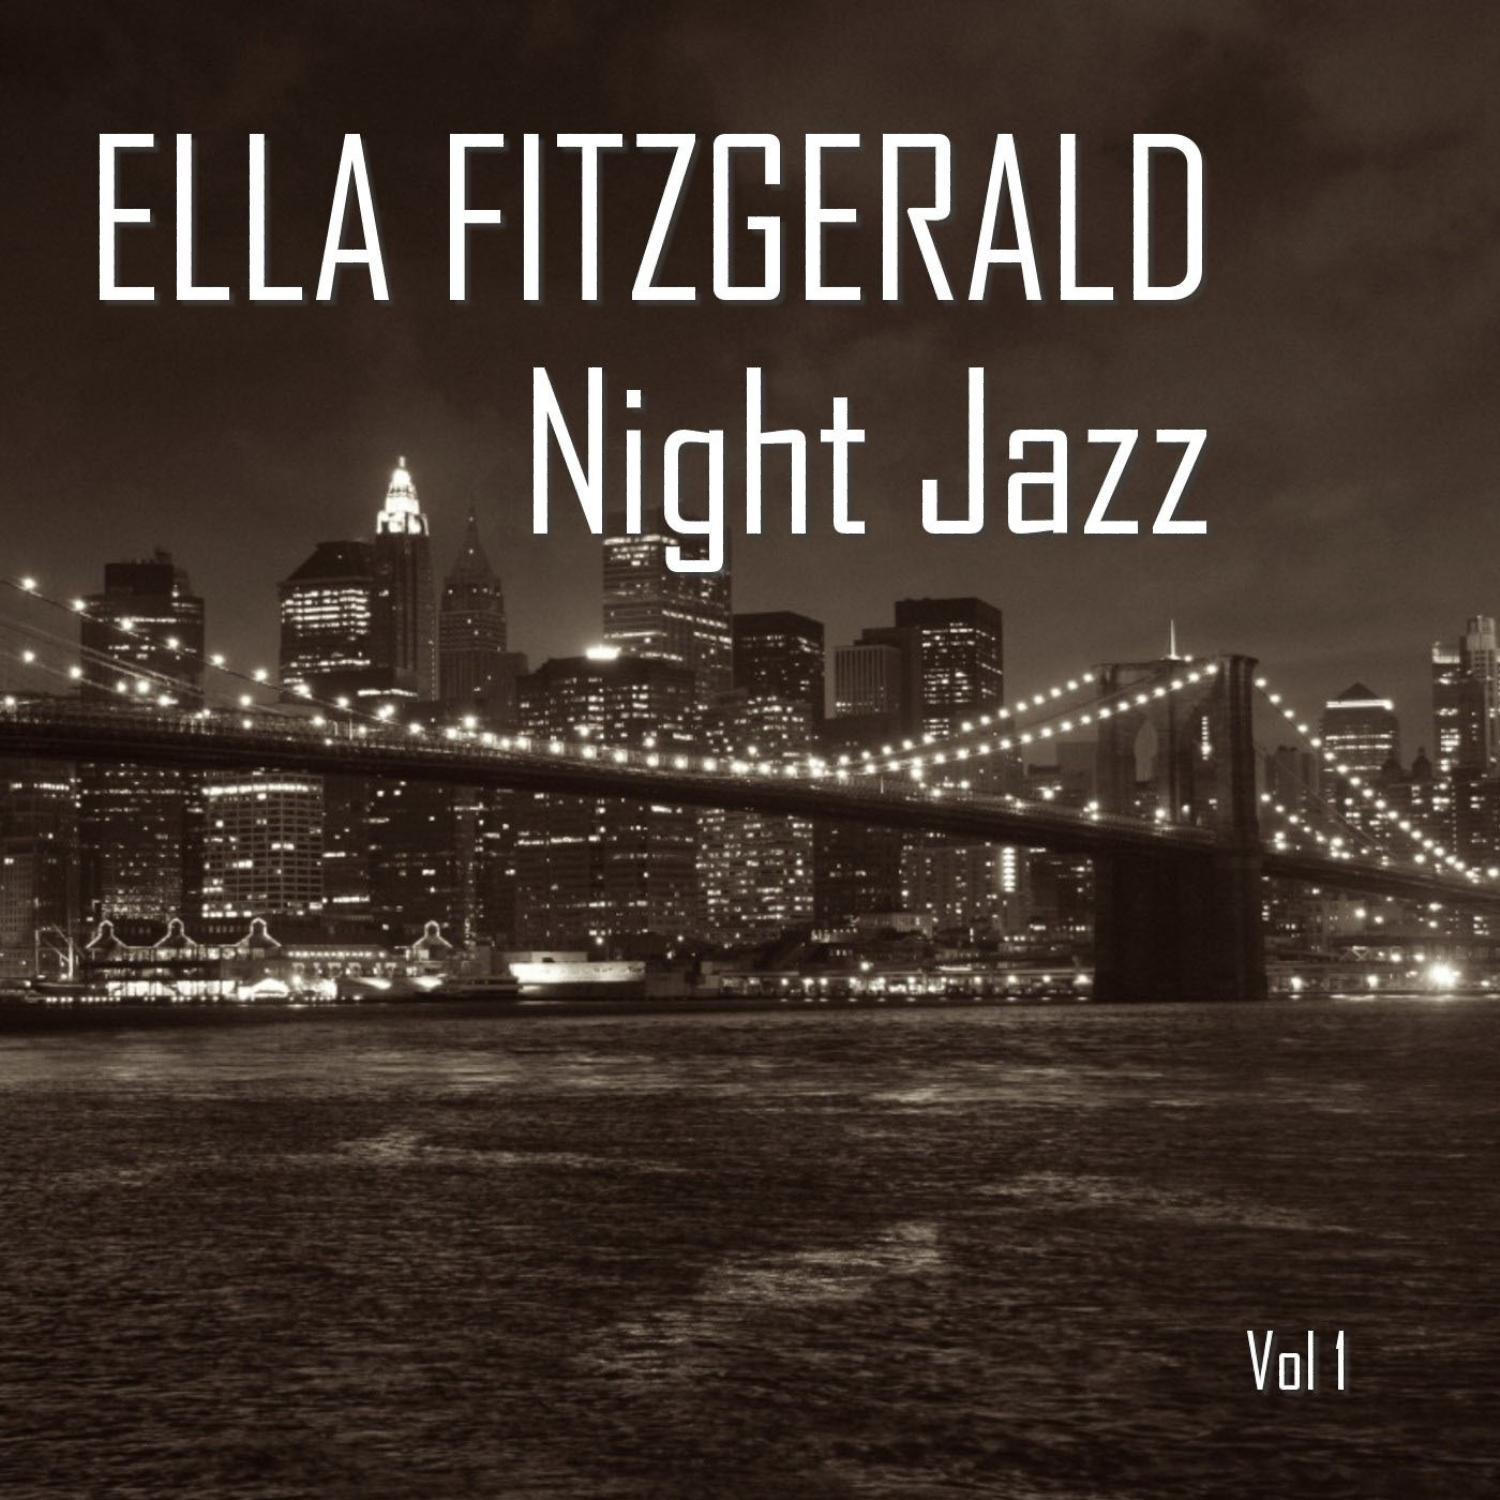 Night Jazz Vol. 1